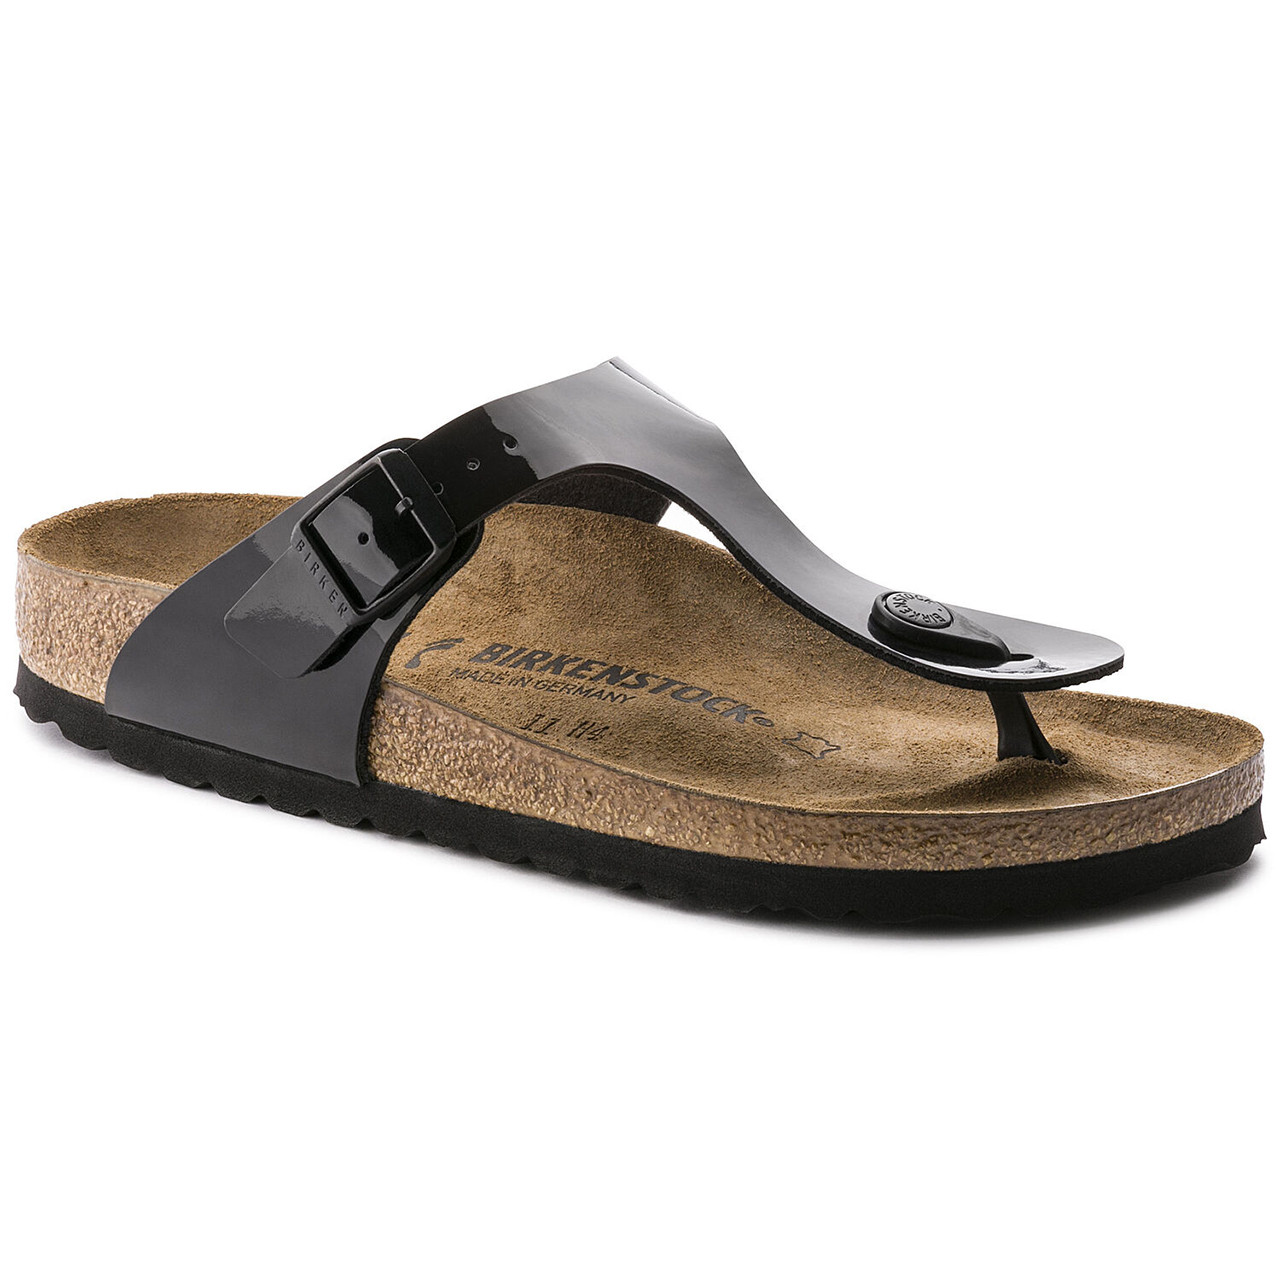 black patent leather birkenstock sandals